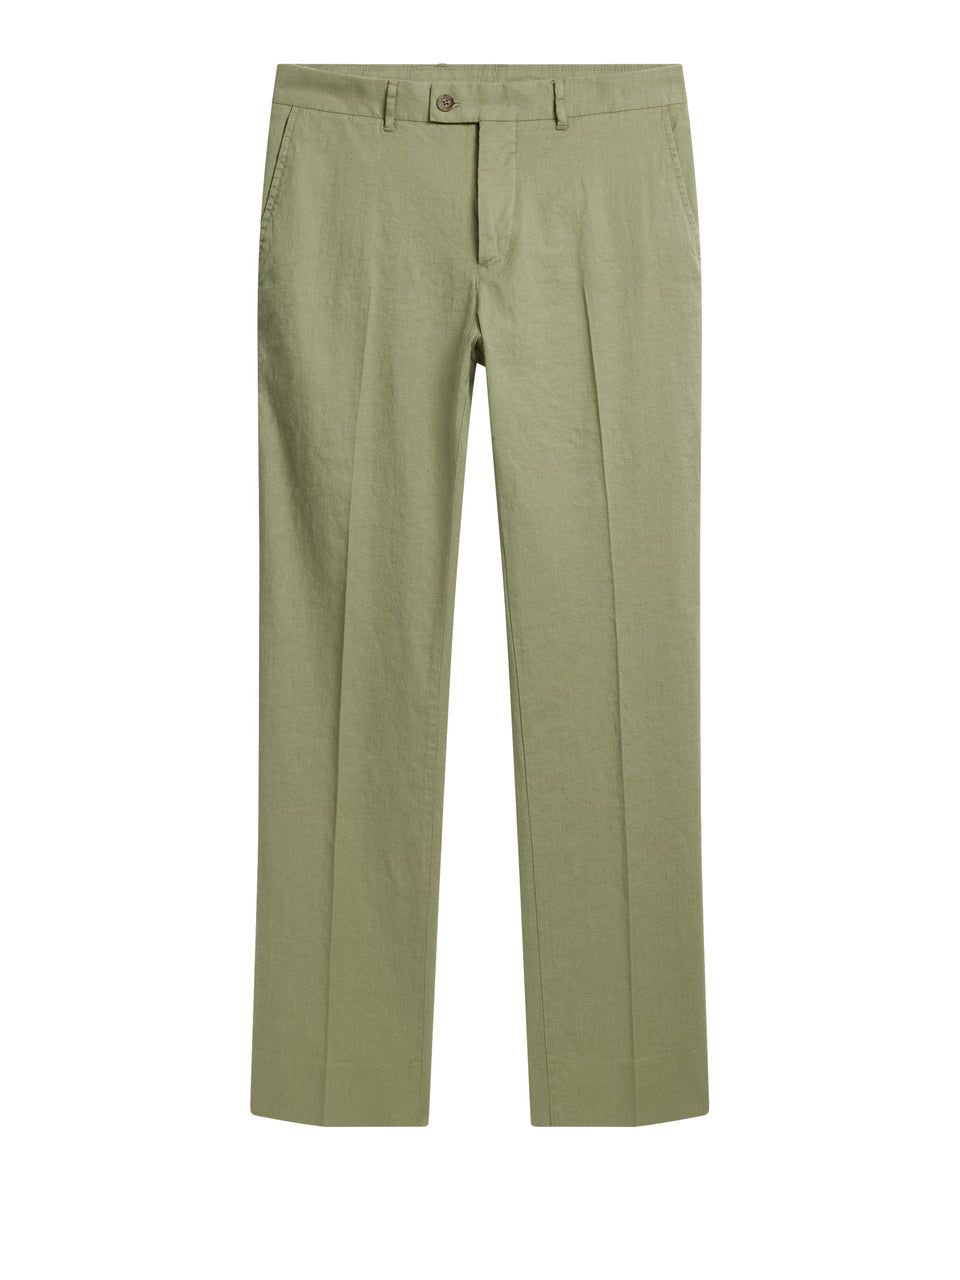 Lois Linen Stretch Pants / Oil Green